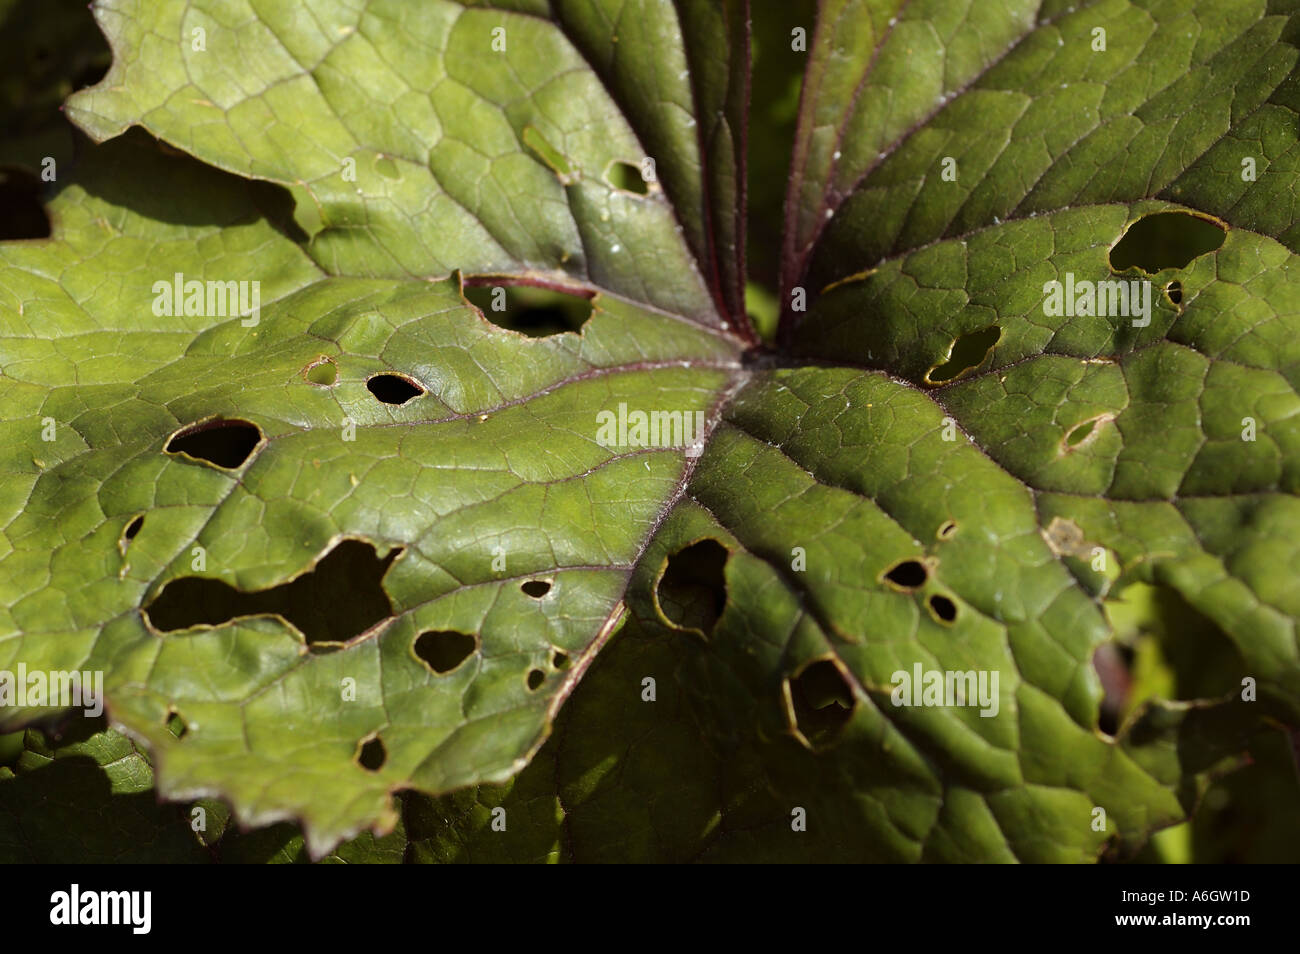 Snail damage on leaves of stipa arundinacea golden hue Stock Photo